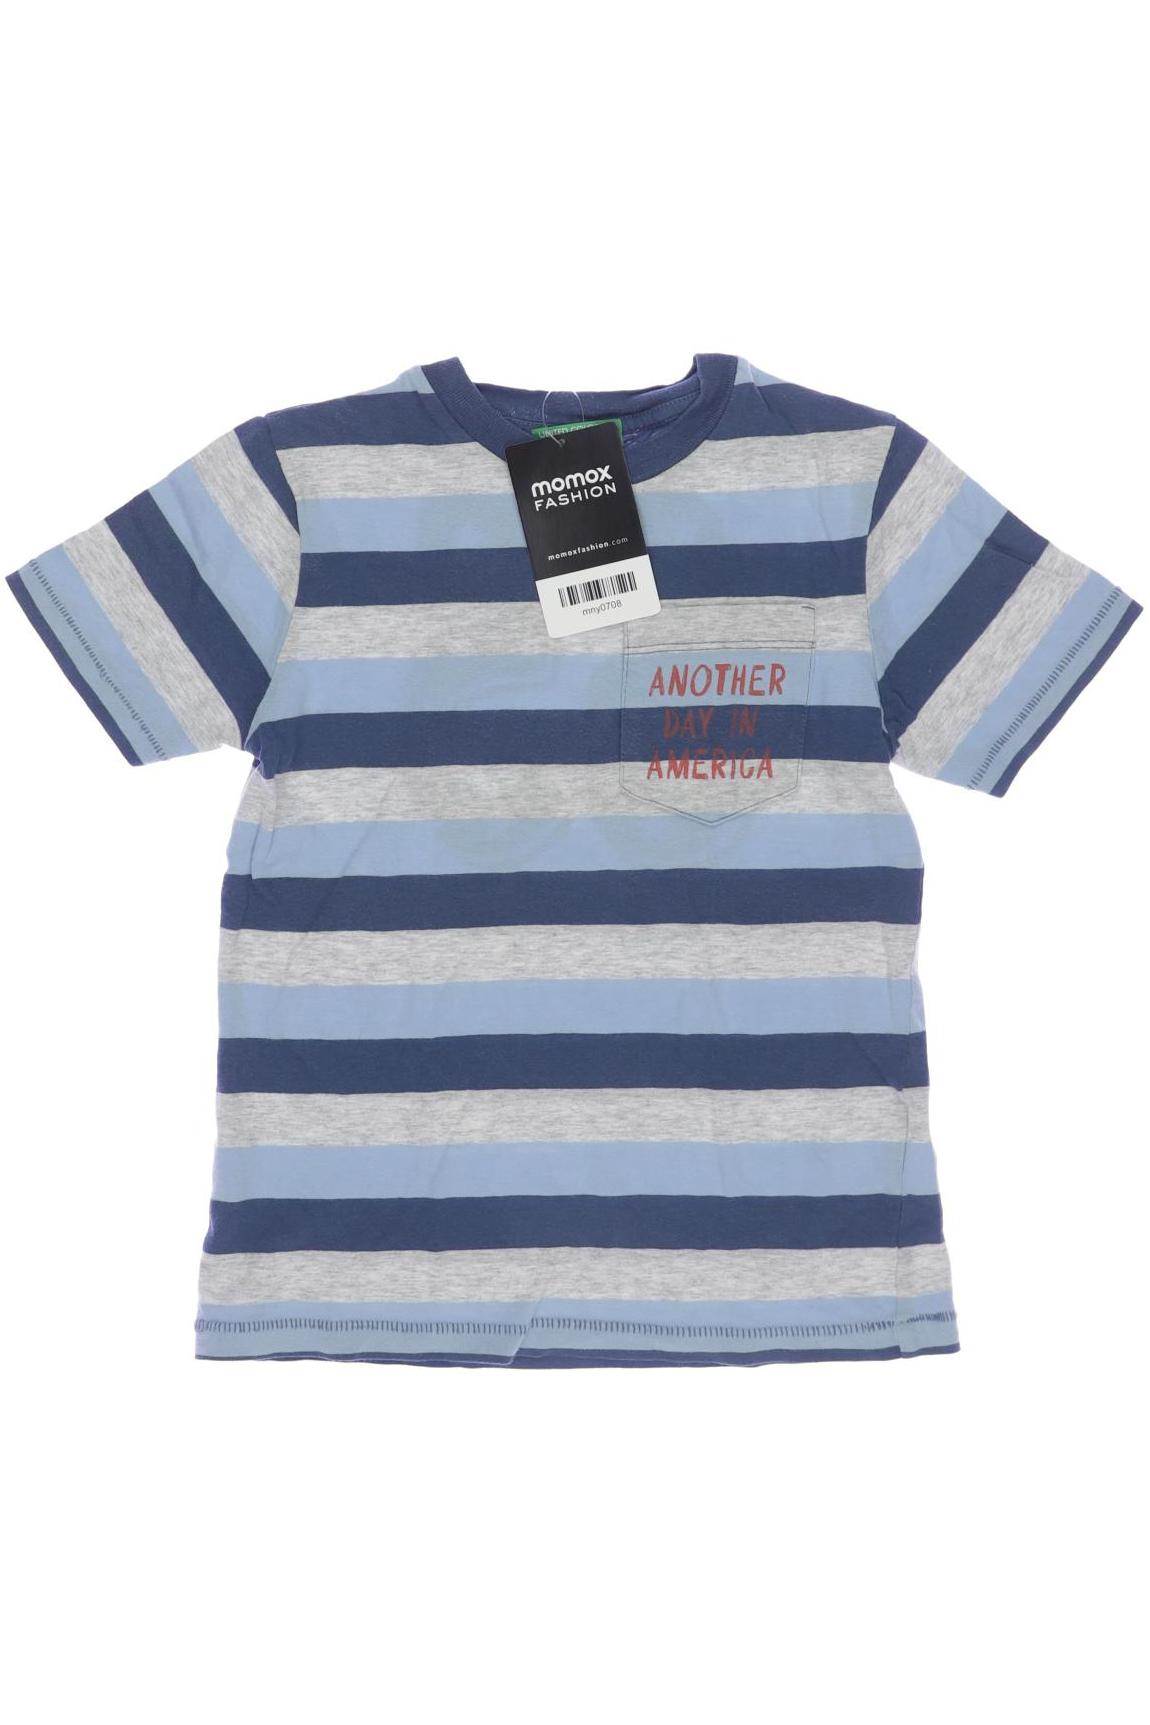 UNITED COLORS OF BENETTON Jungen T-Shirt, marineblau von United Colors of Benetton